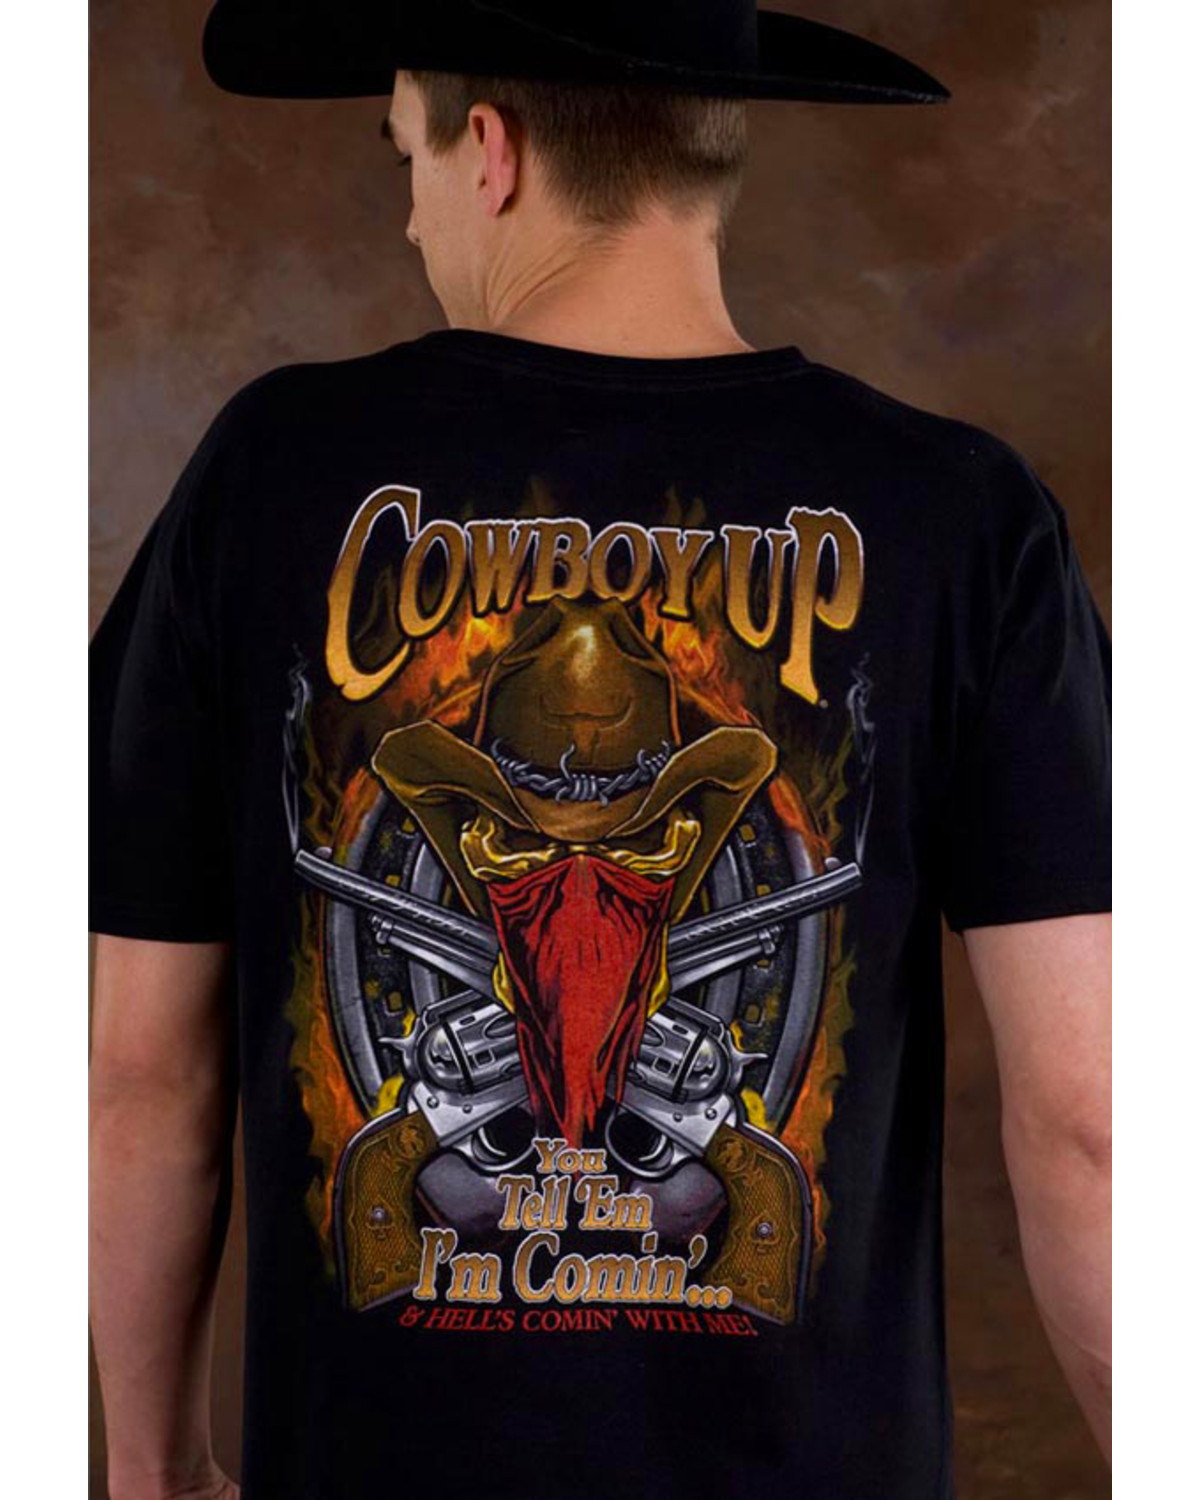 Cowboy Up Men's Skeleton Short Sleeve Graphic T-Shirt